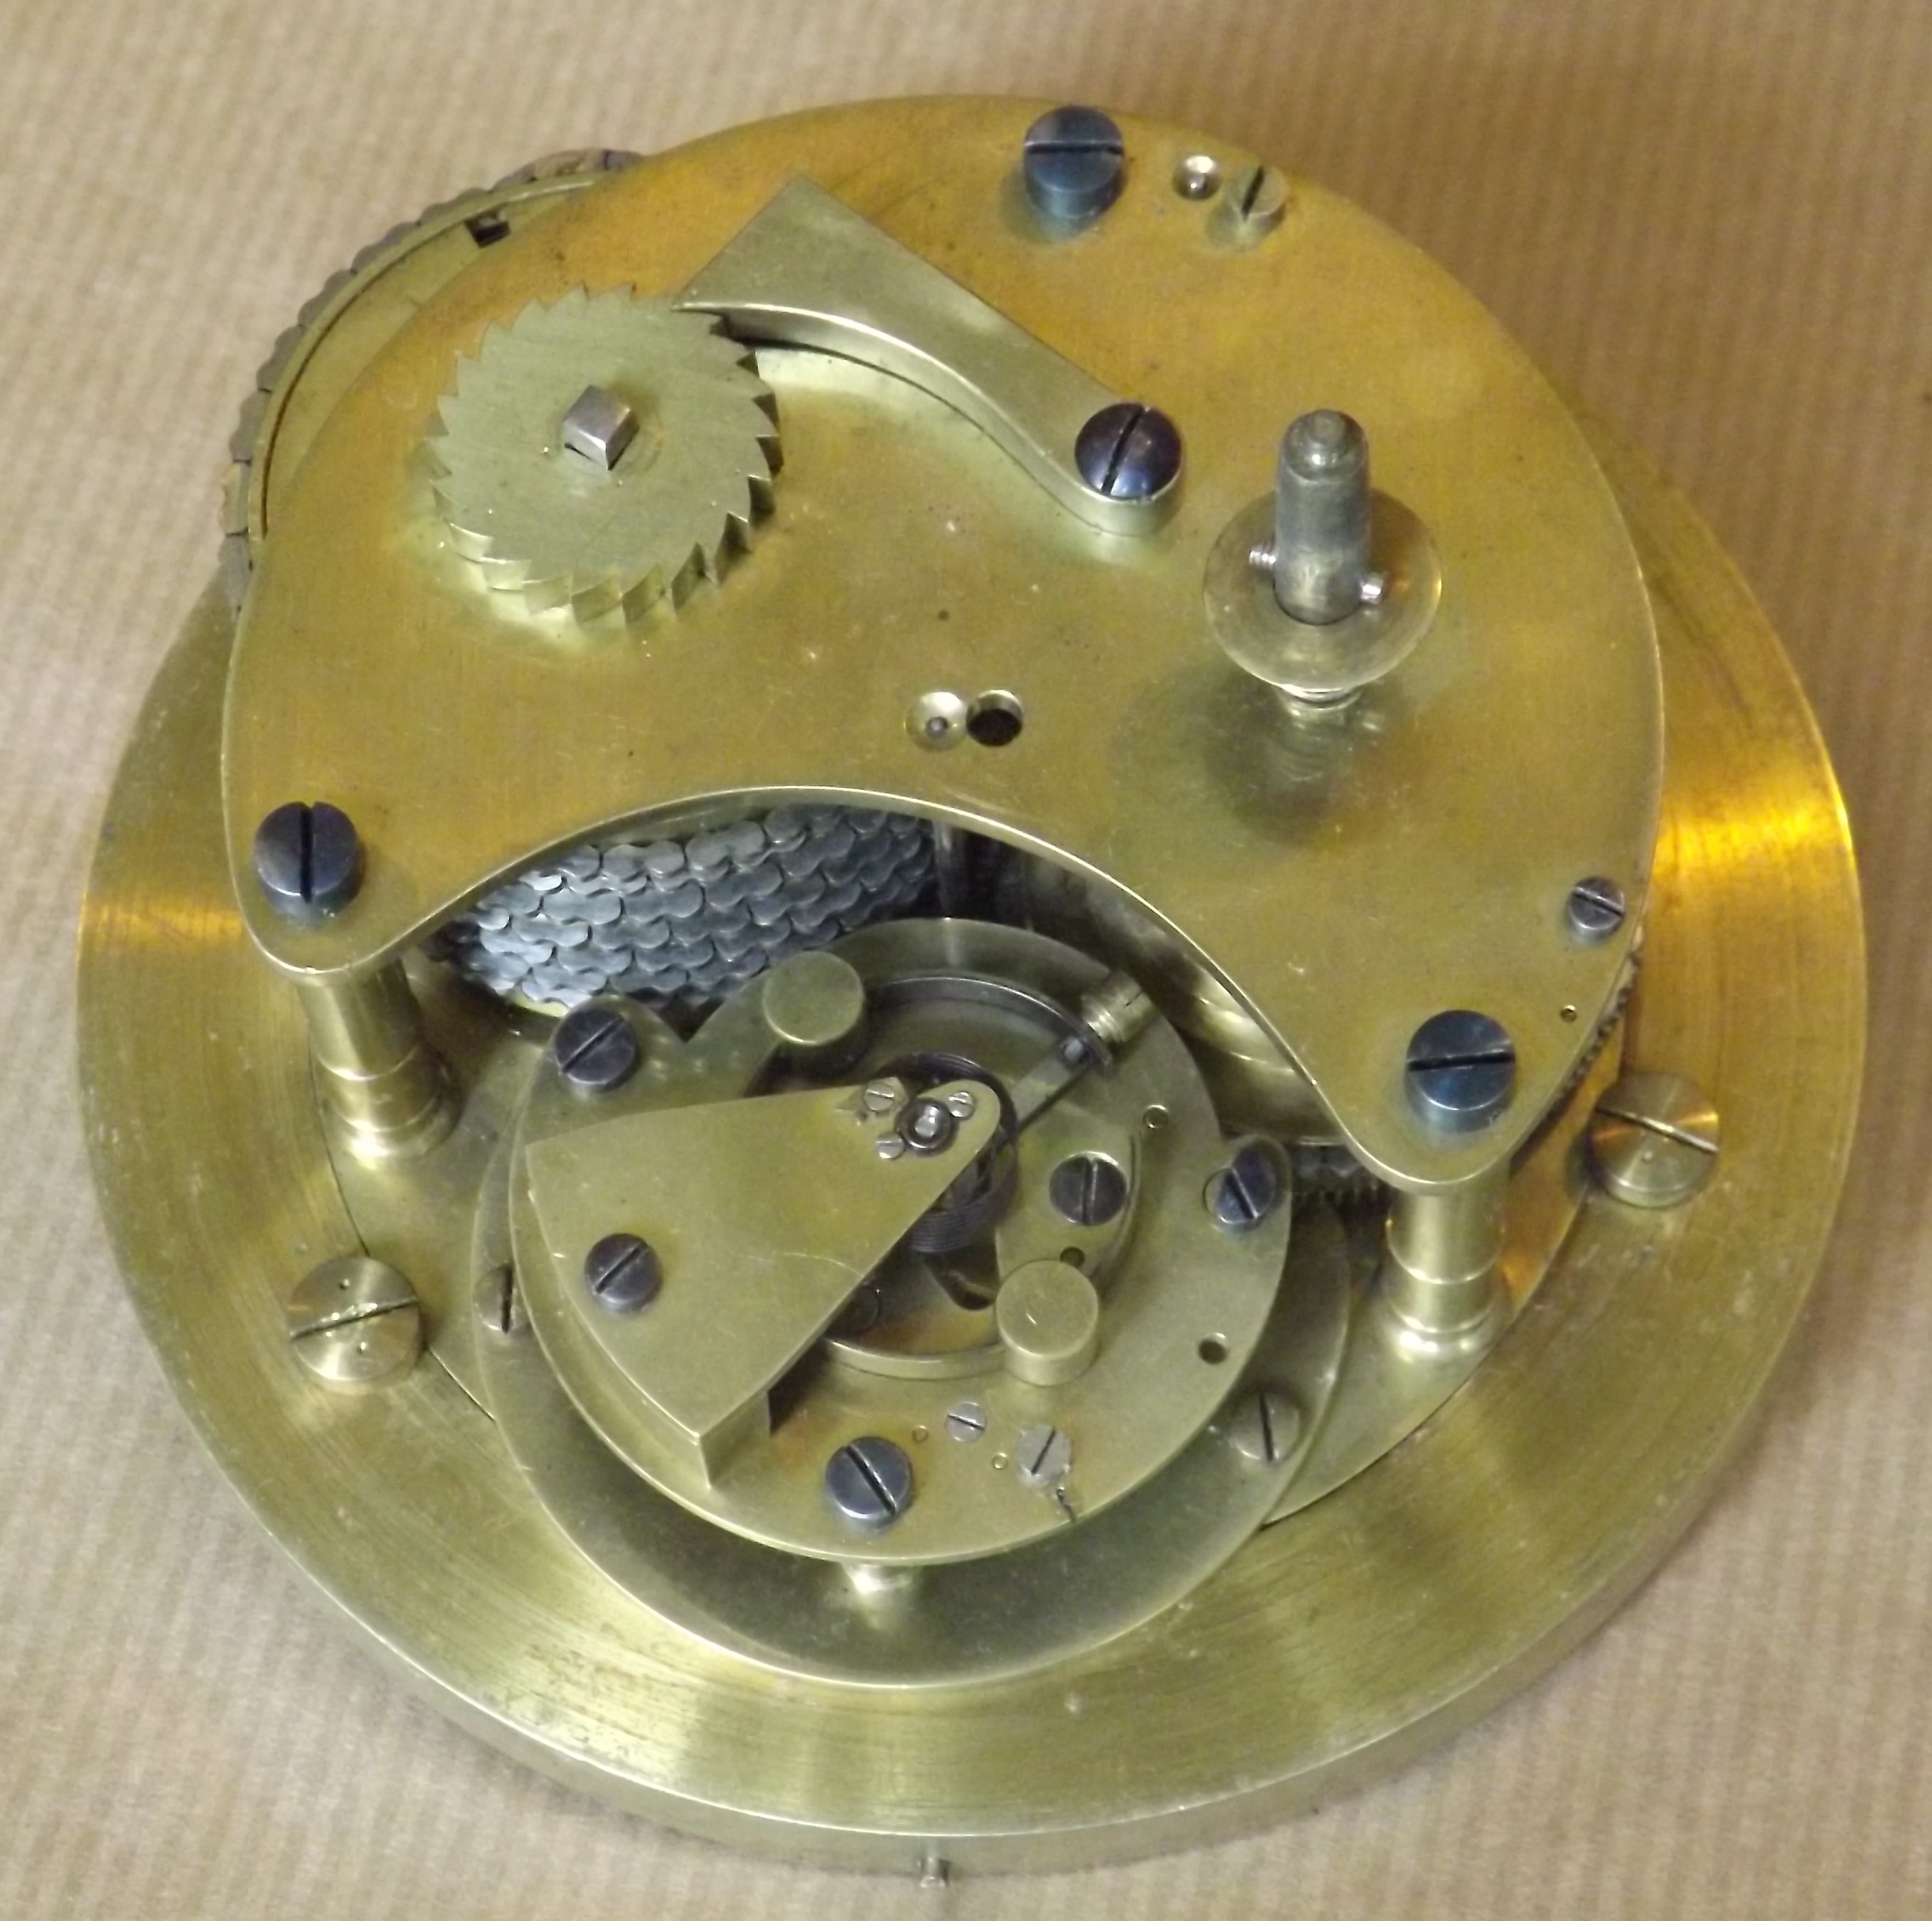 Barraud's, London, a mid 19th century mahogany cased eight day marine chronometer, signed 'Barraud' - Image 2 of 7